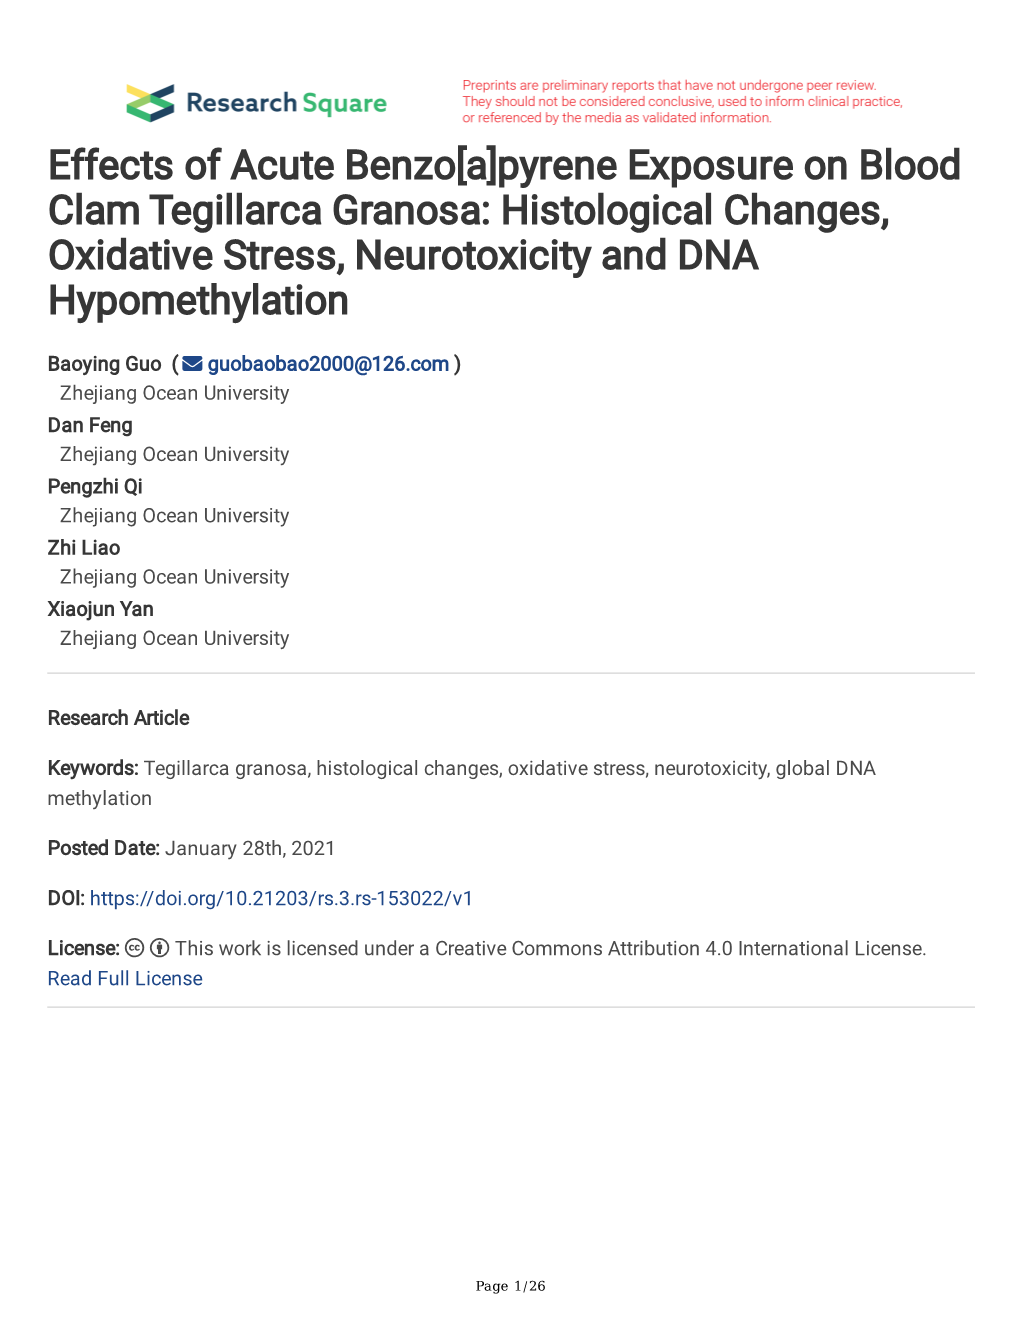 Pyrene Exposure on Blood Clam Tegillarca Granosa: Histological Changes, Oxidative Stress, Neurotoxicity and DNA Hypomethylation